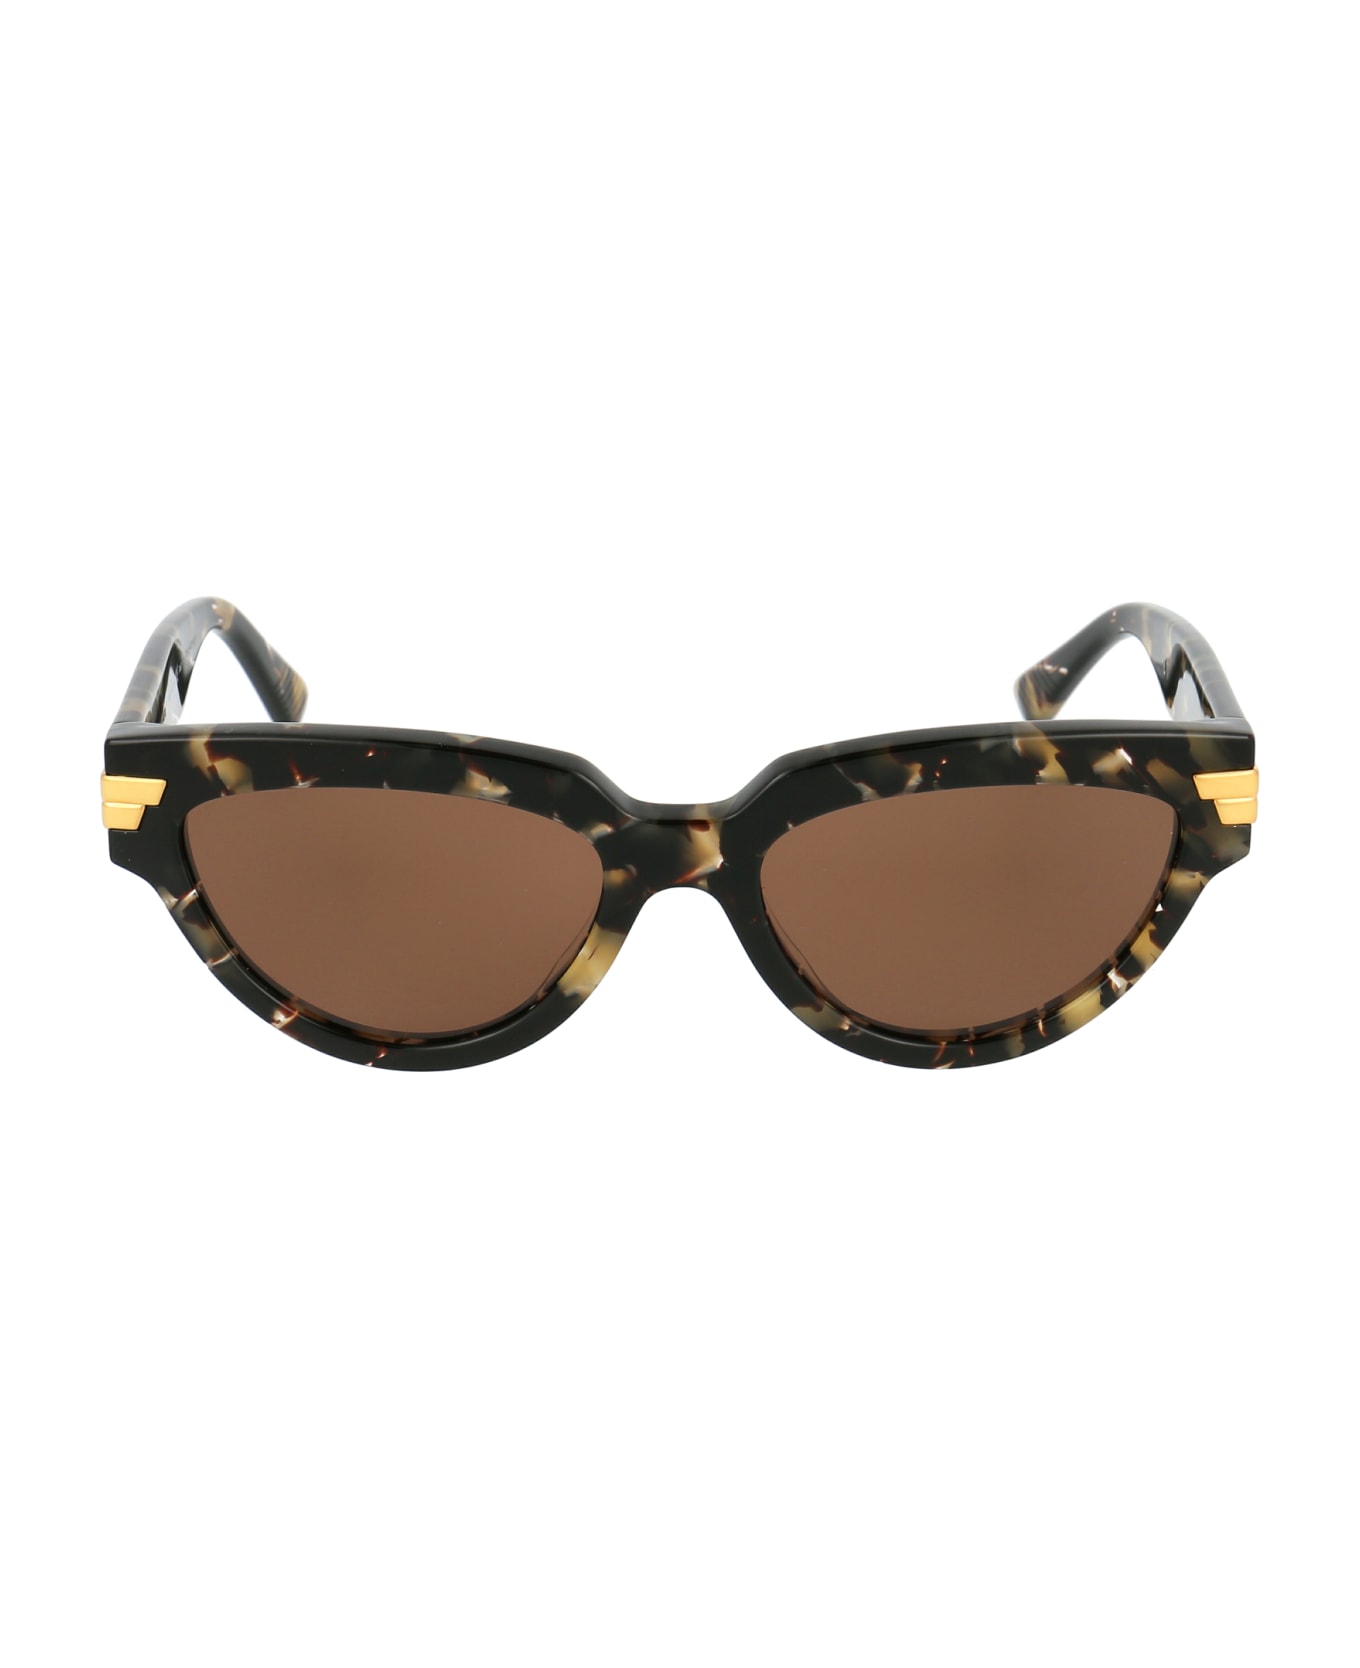 Bottega Veneta Eyewear Bv1035s Sunglasses - 003 HAVANA HAVANA BROWN サングラス